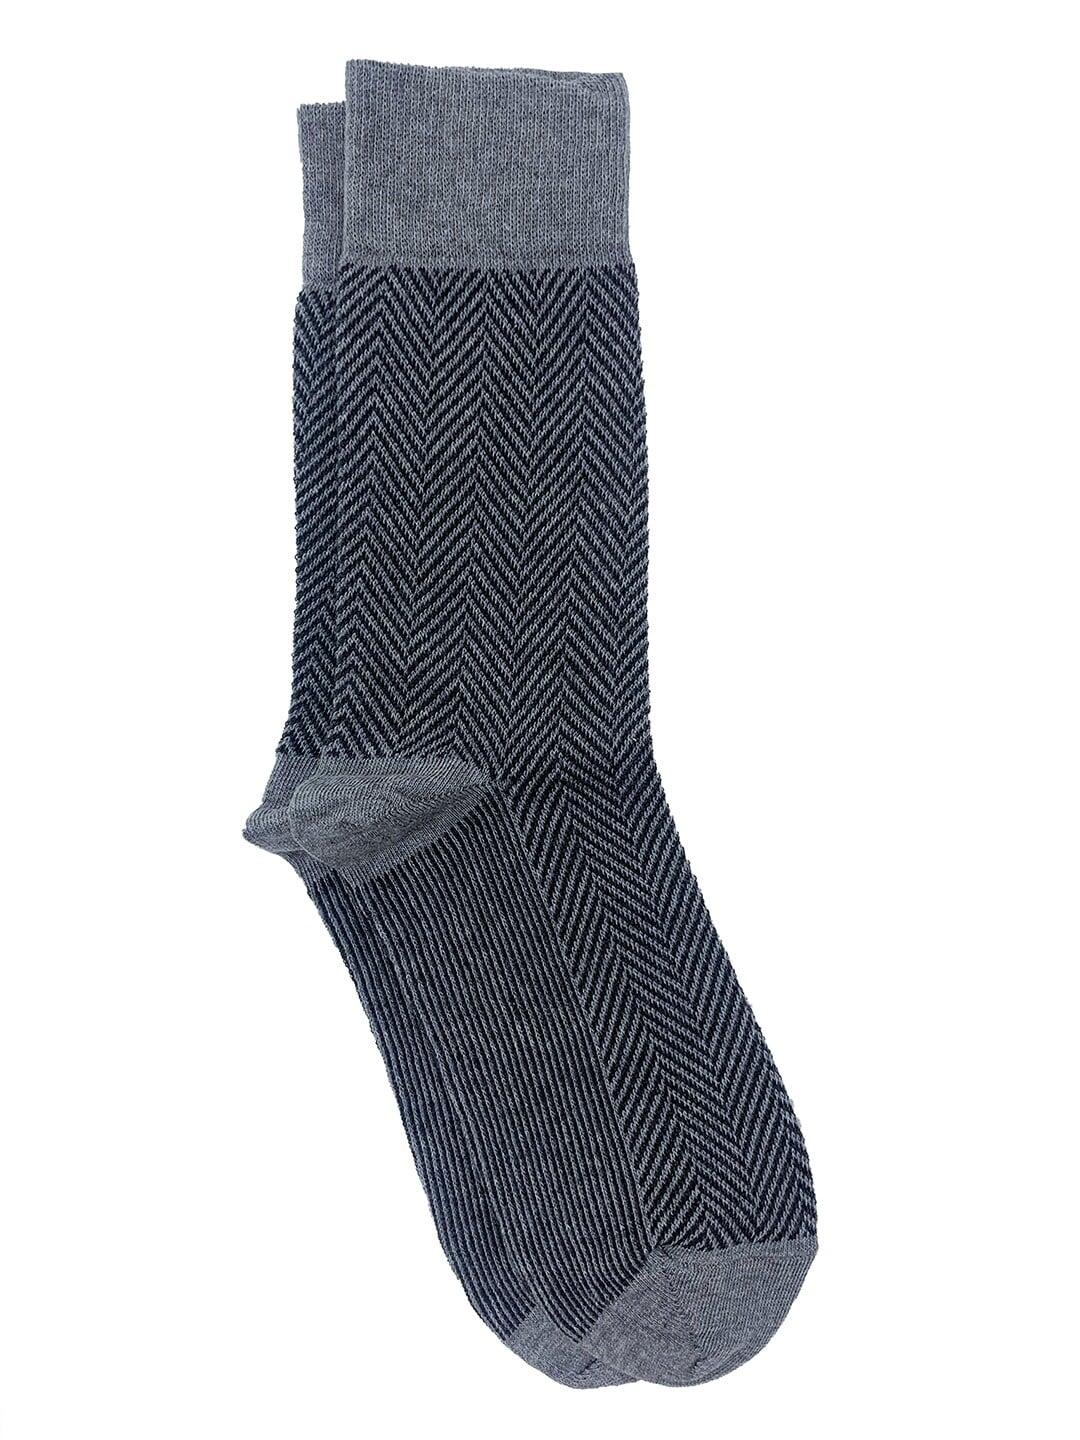 mint & oak men grey & black patterned above ankle-length socks